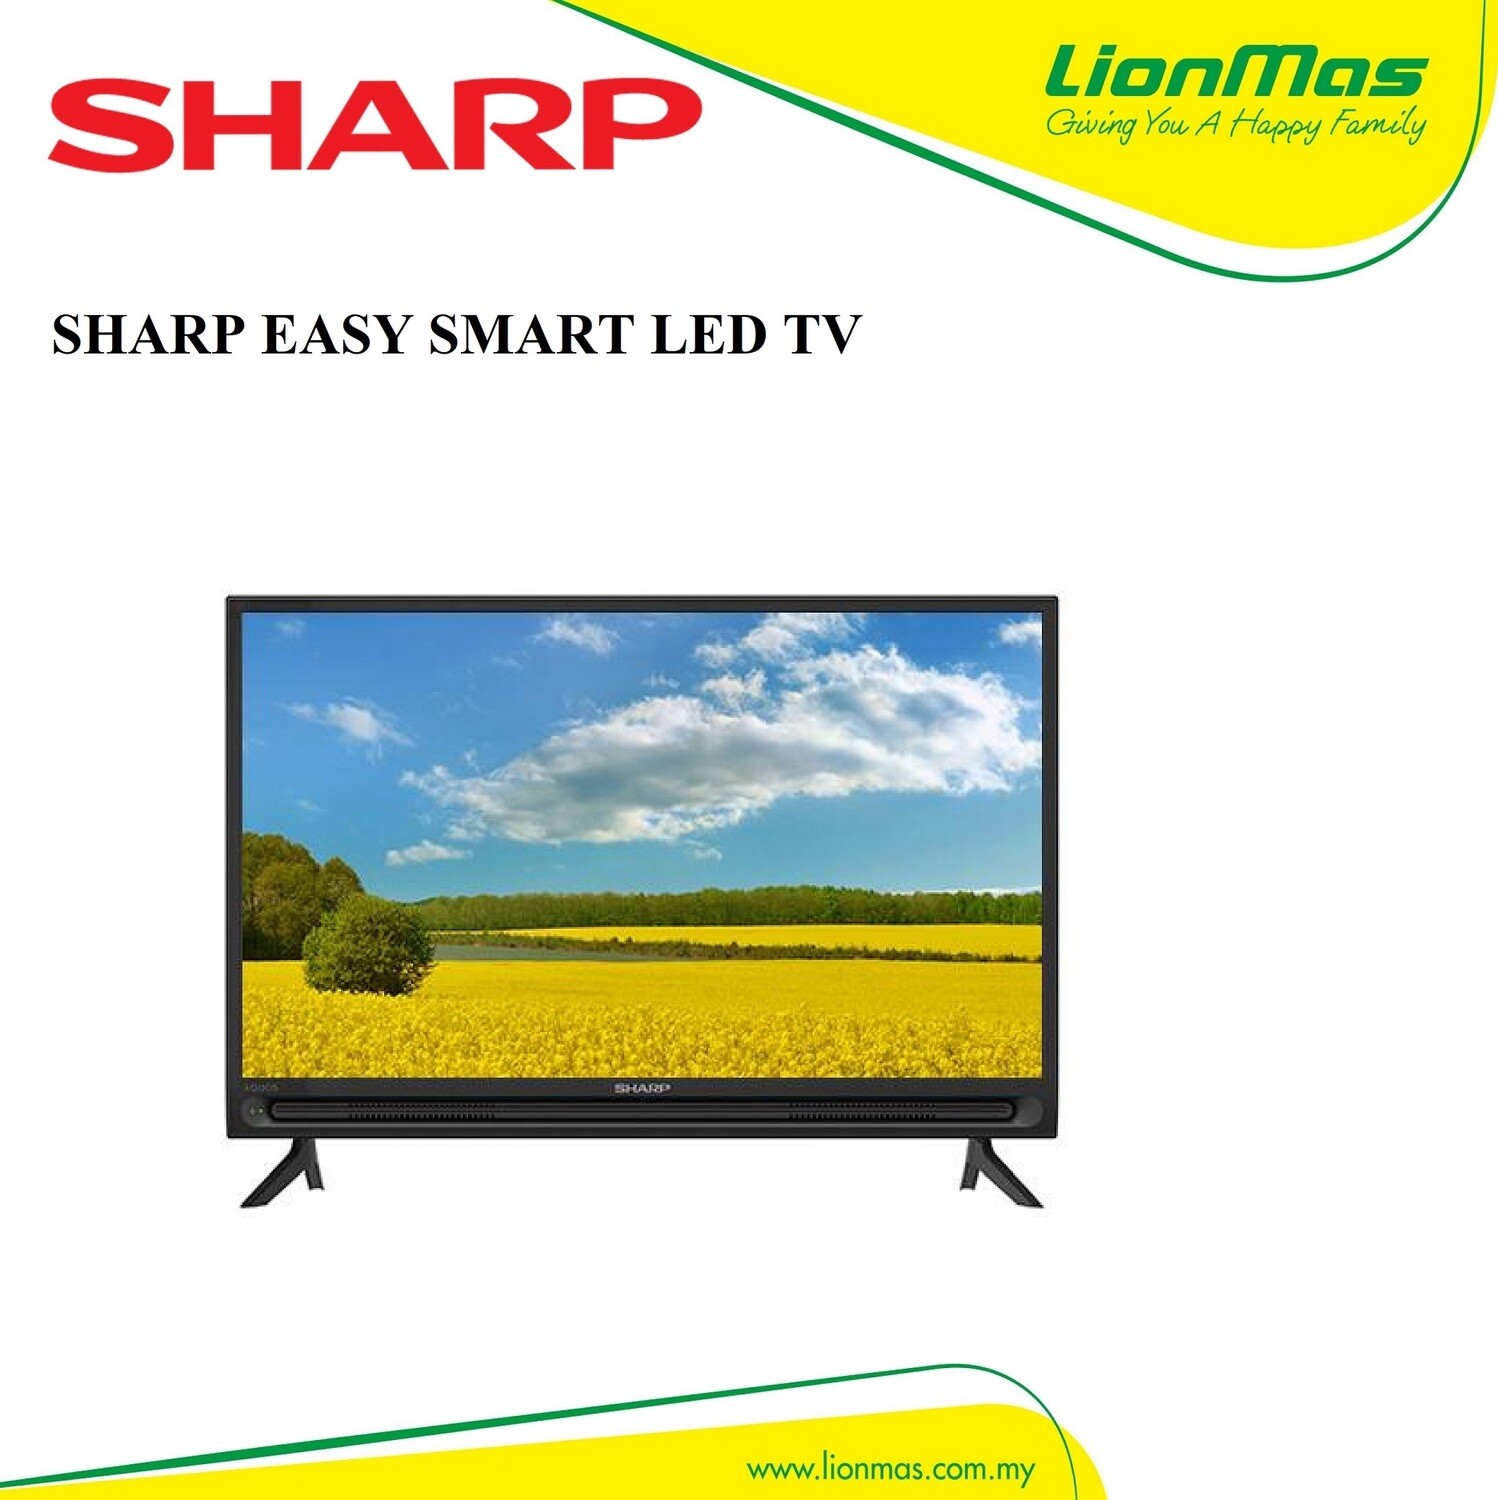 SHARP 32" HD READY EASY SMART LED TV 2TC32DF1X